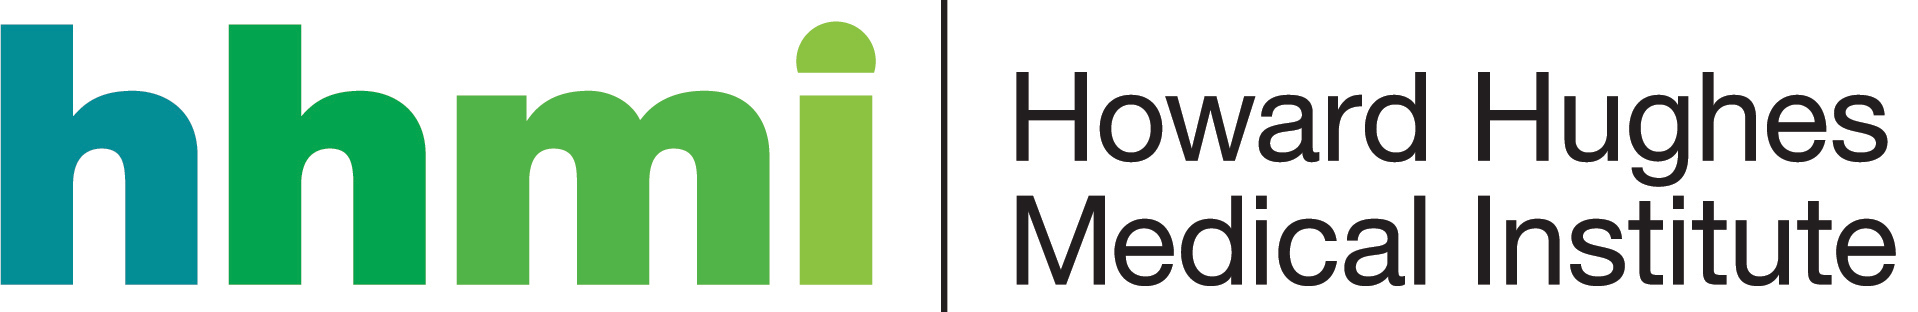 logo: Howard Hughes Medical Institute